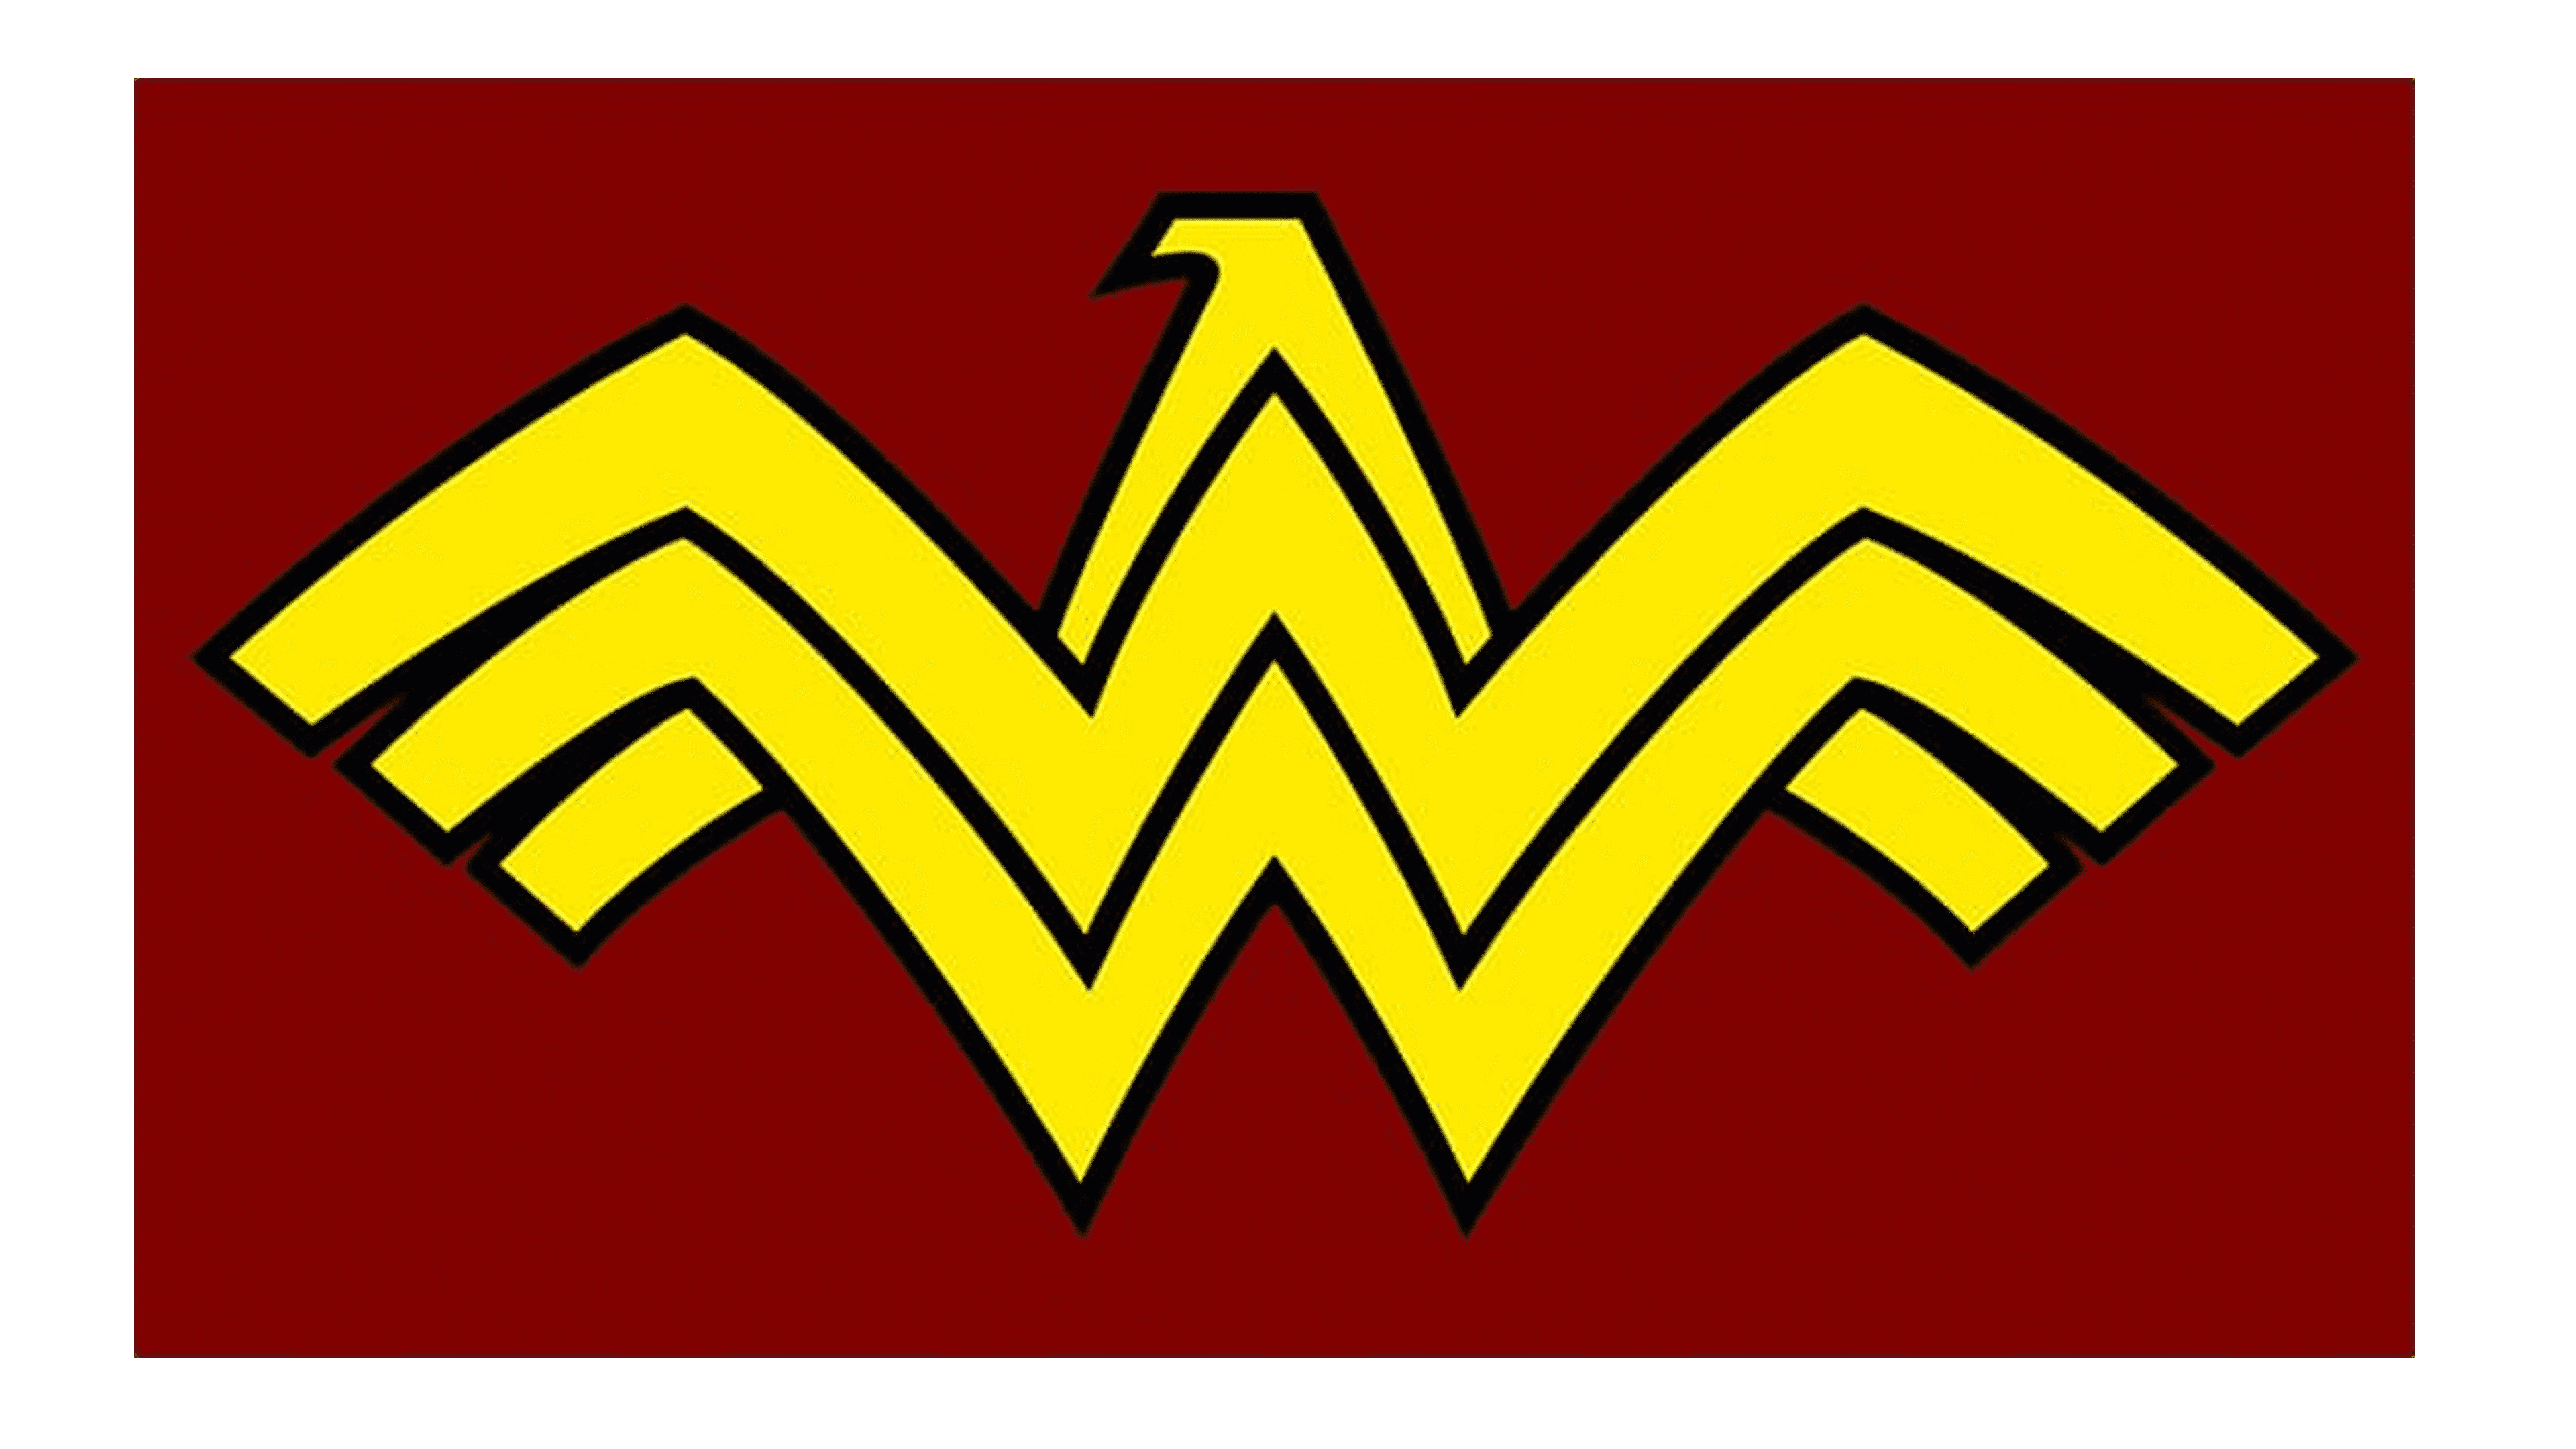 Wonder Woman Symbol SVG